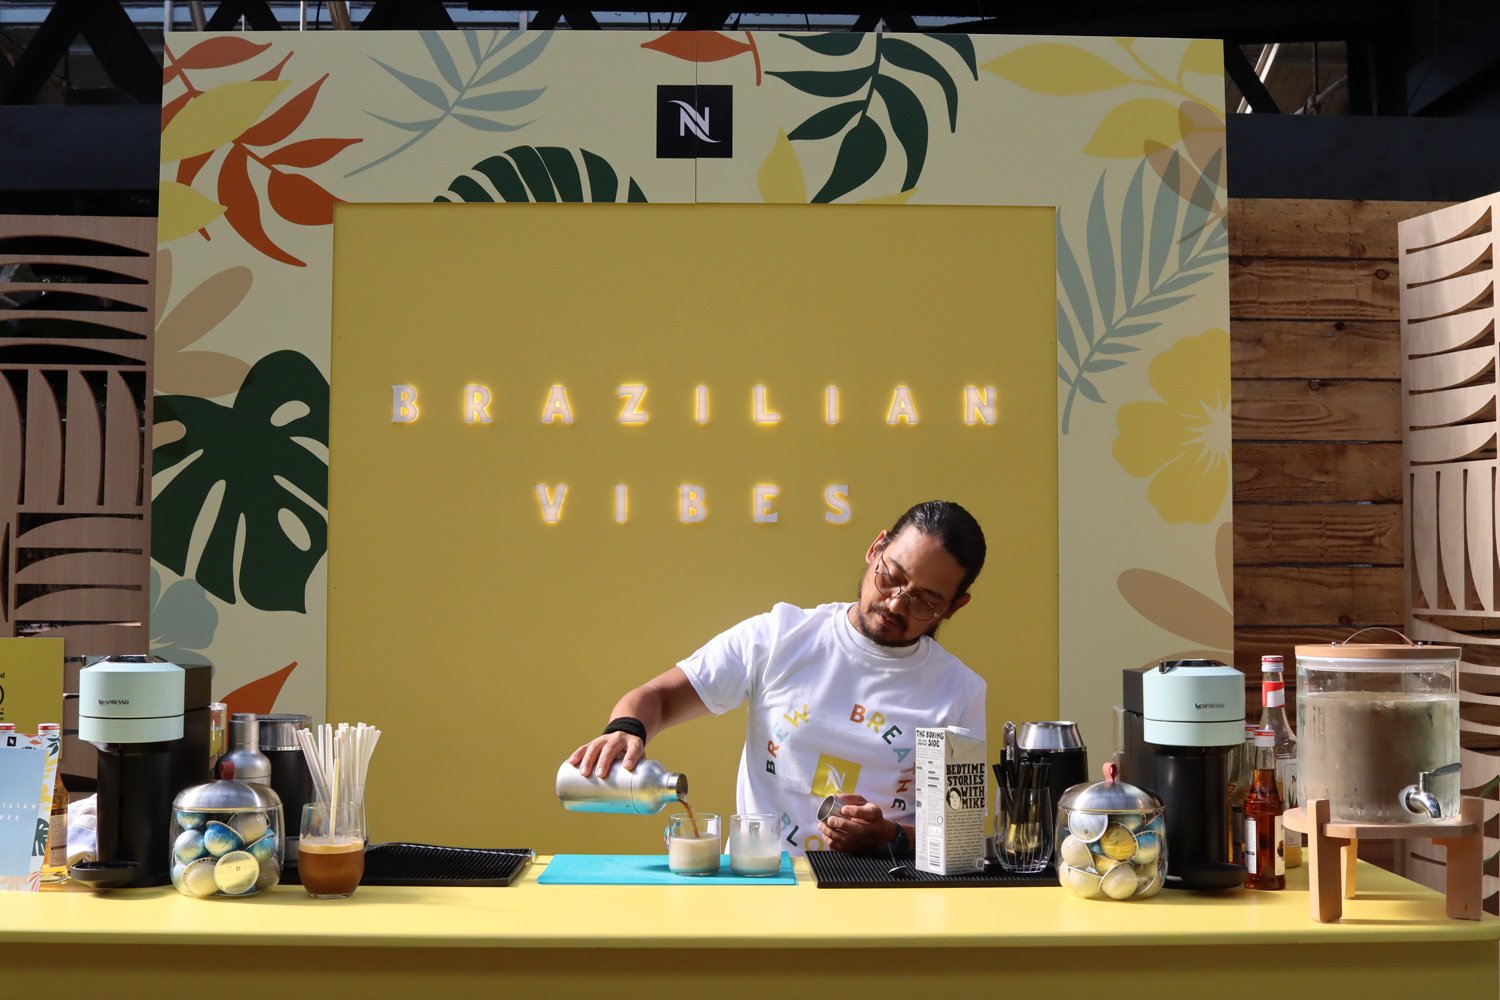 Nespresso - Brazilian Vibes - Pop Up Agency